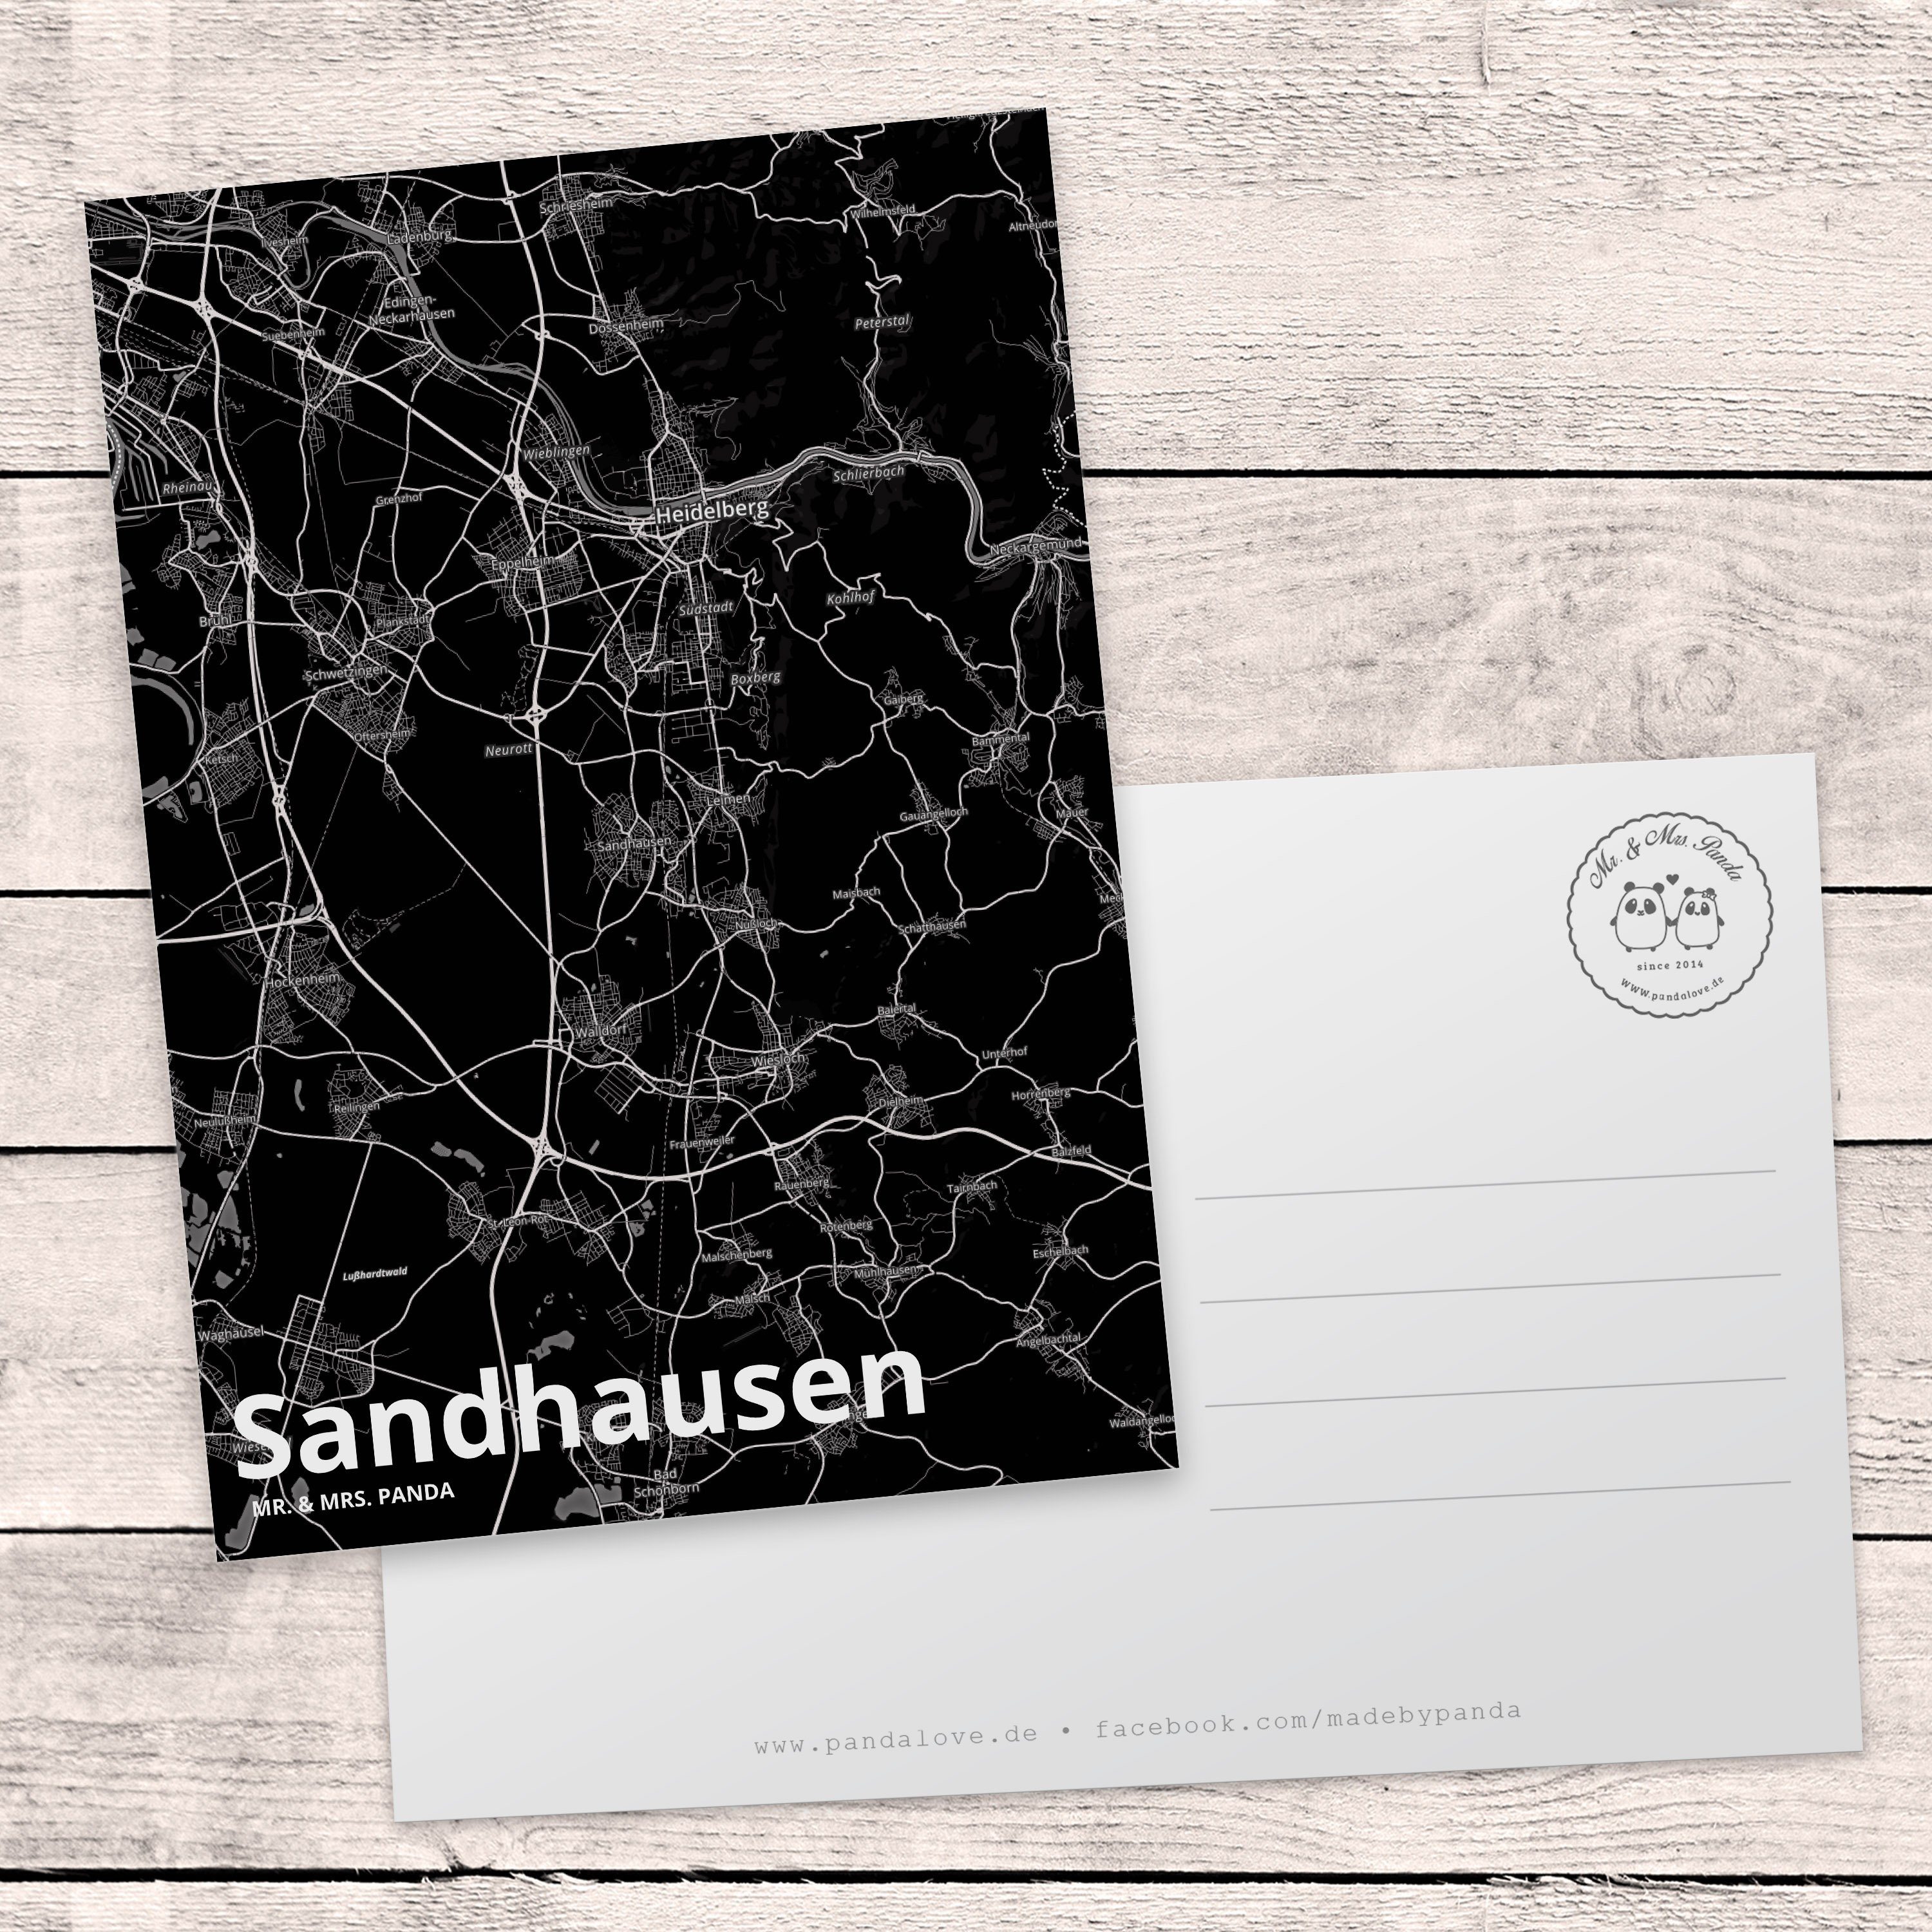 Mr. & Mrs. Landkarte Map Sandhausen Ort, Karte - Stadt Dorf Panda Stadtplan Geschenk, Postkarte